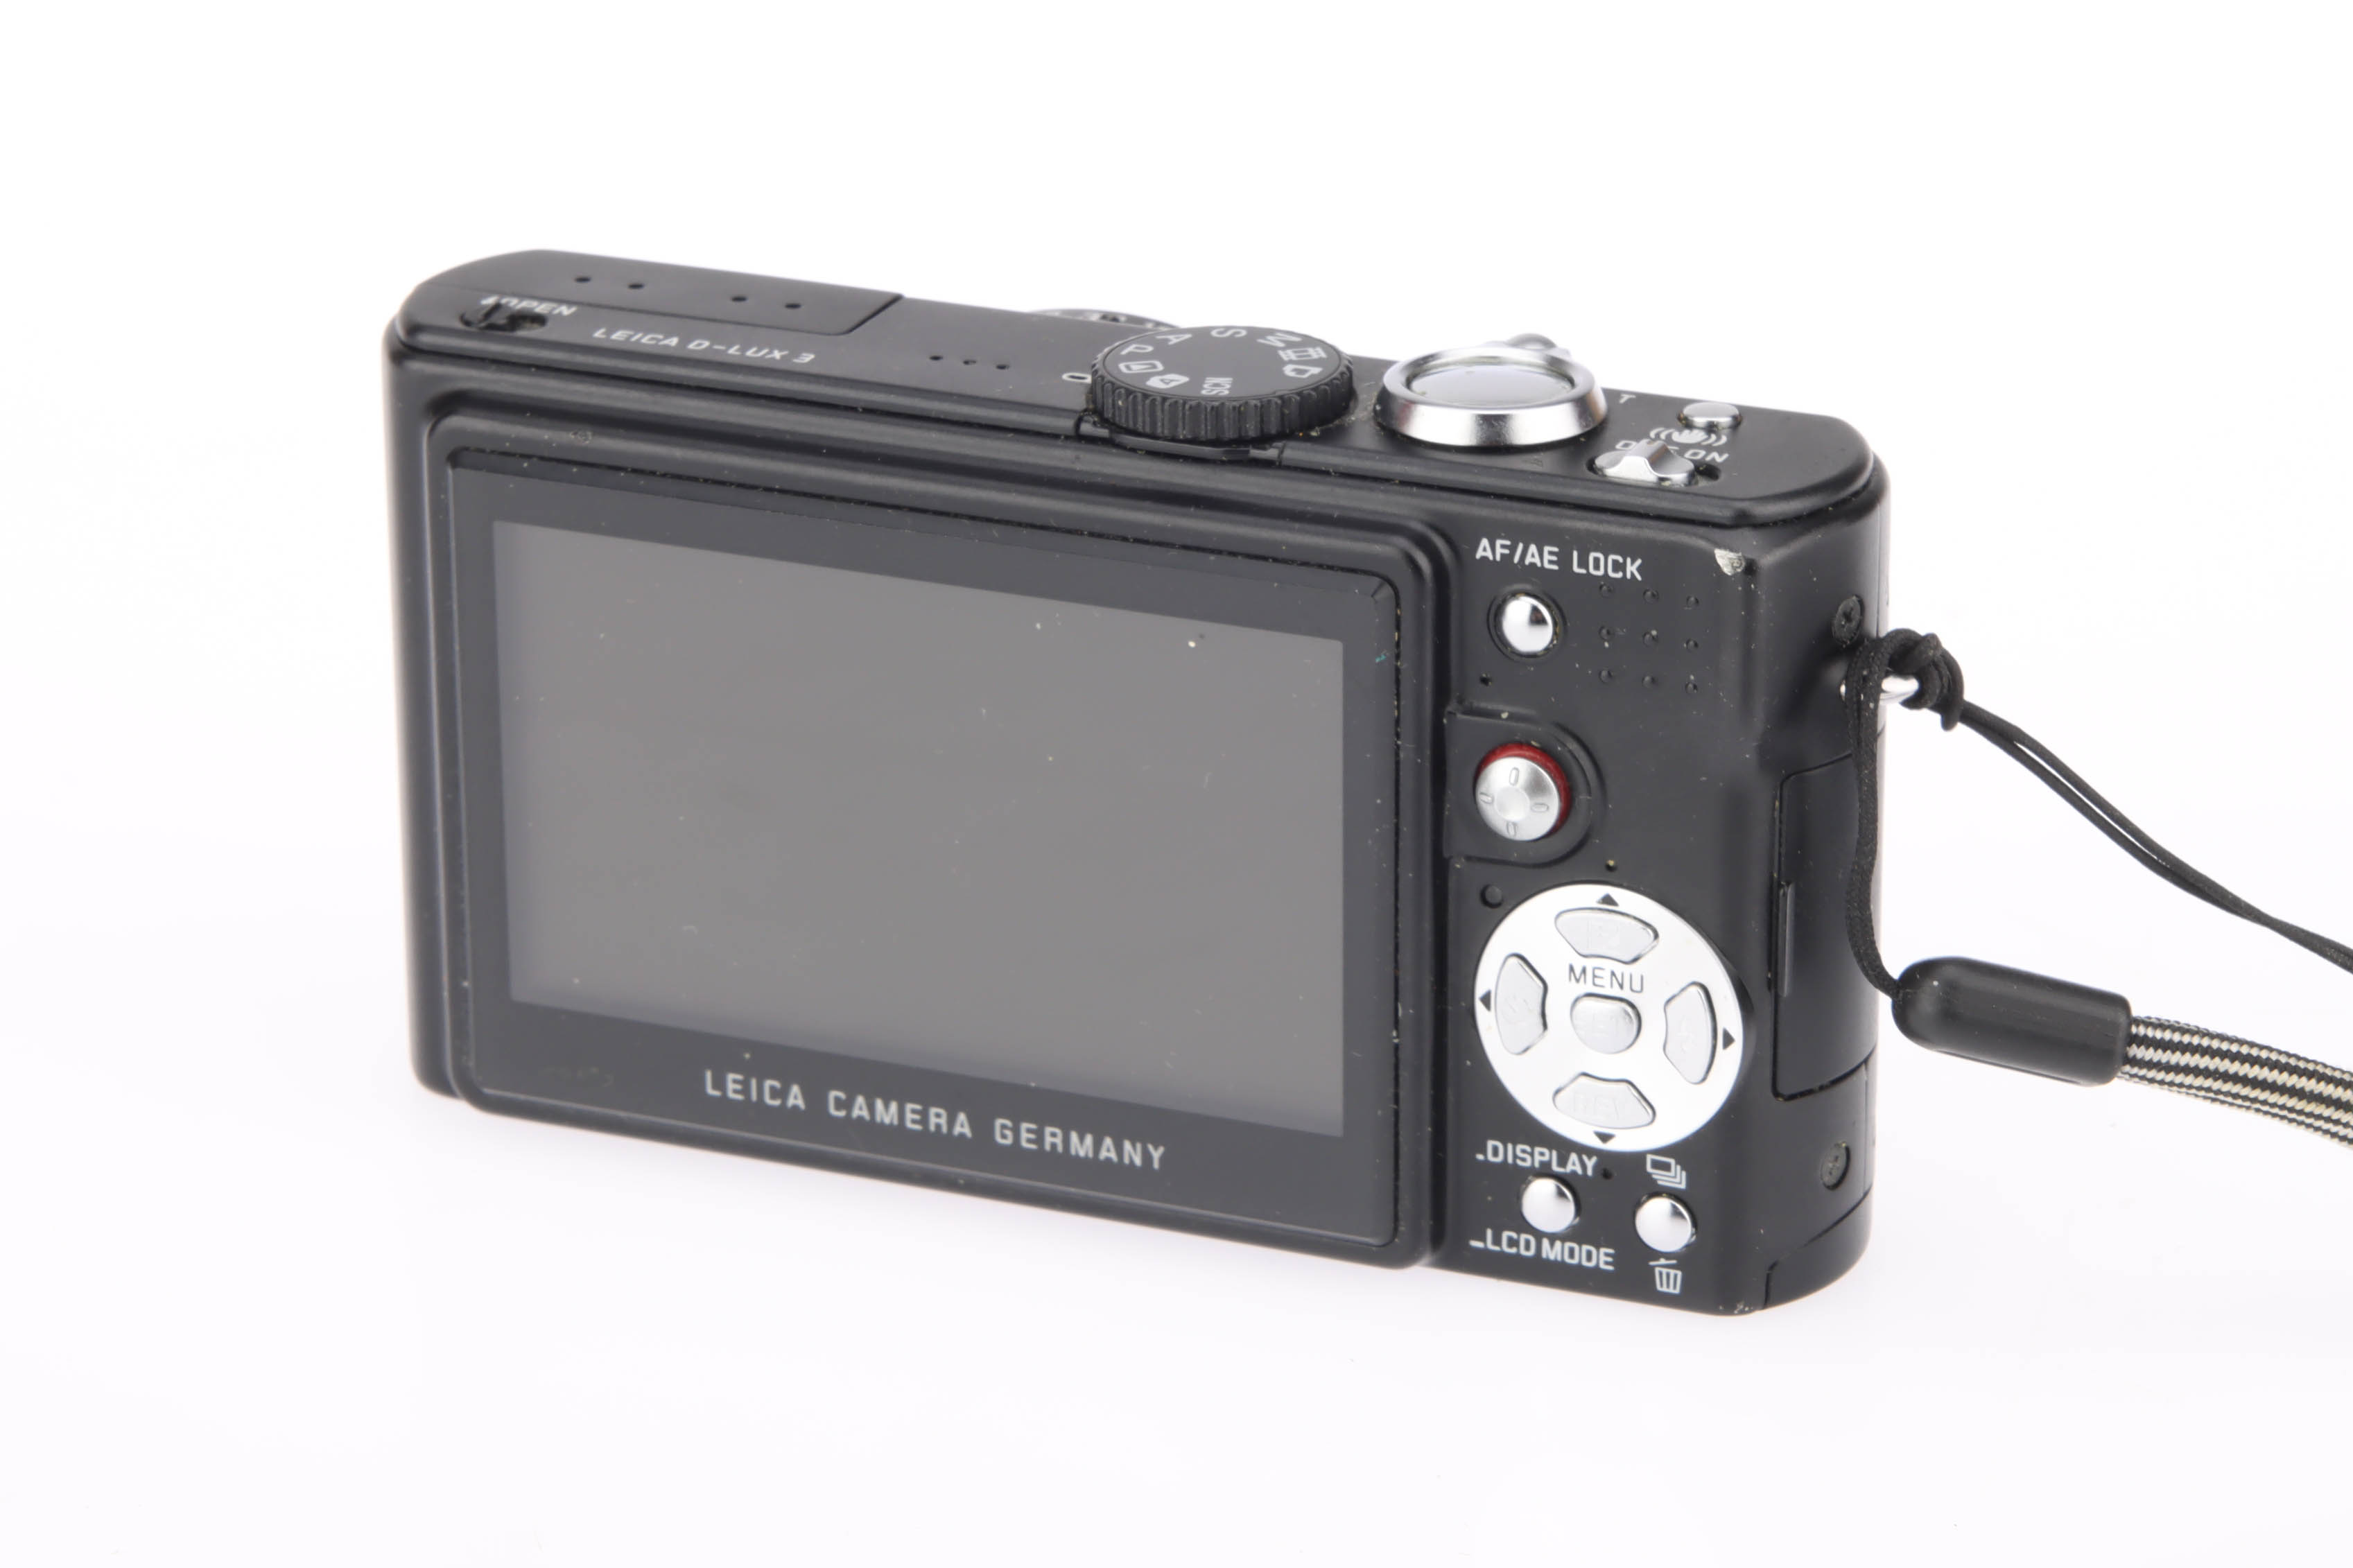 Lot 252 - A Leica D-Lux 3 Compact Digital Camera